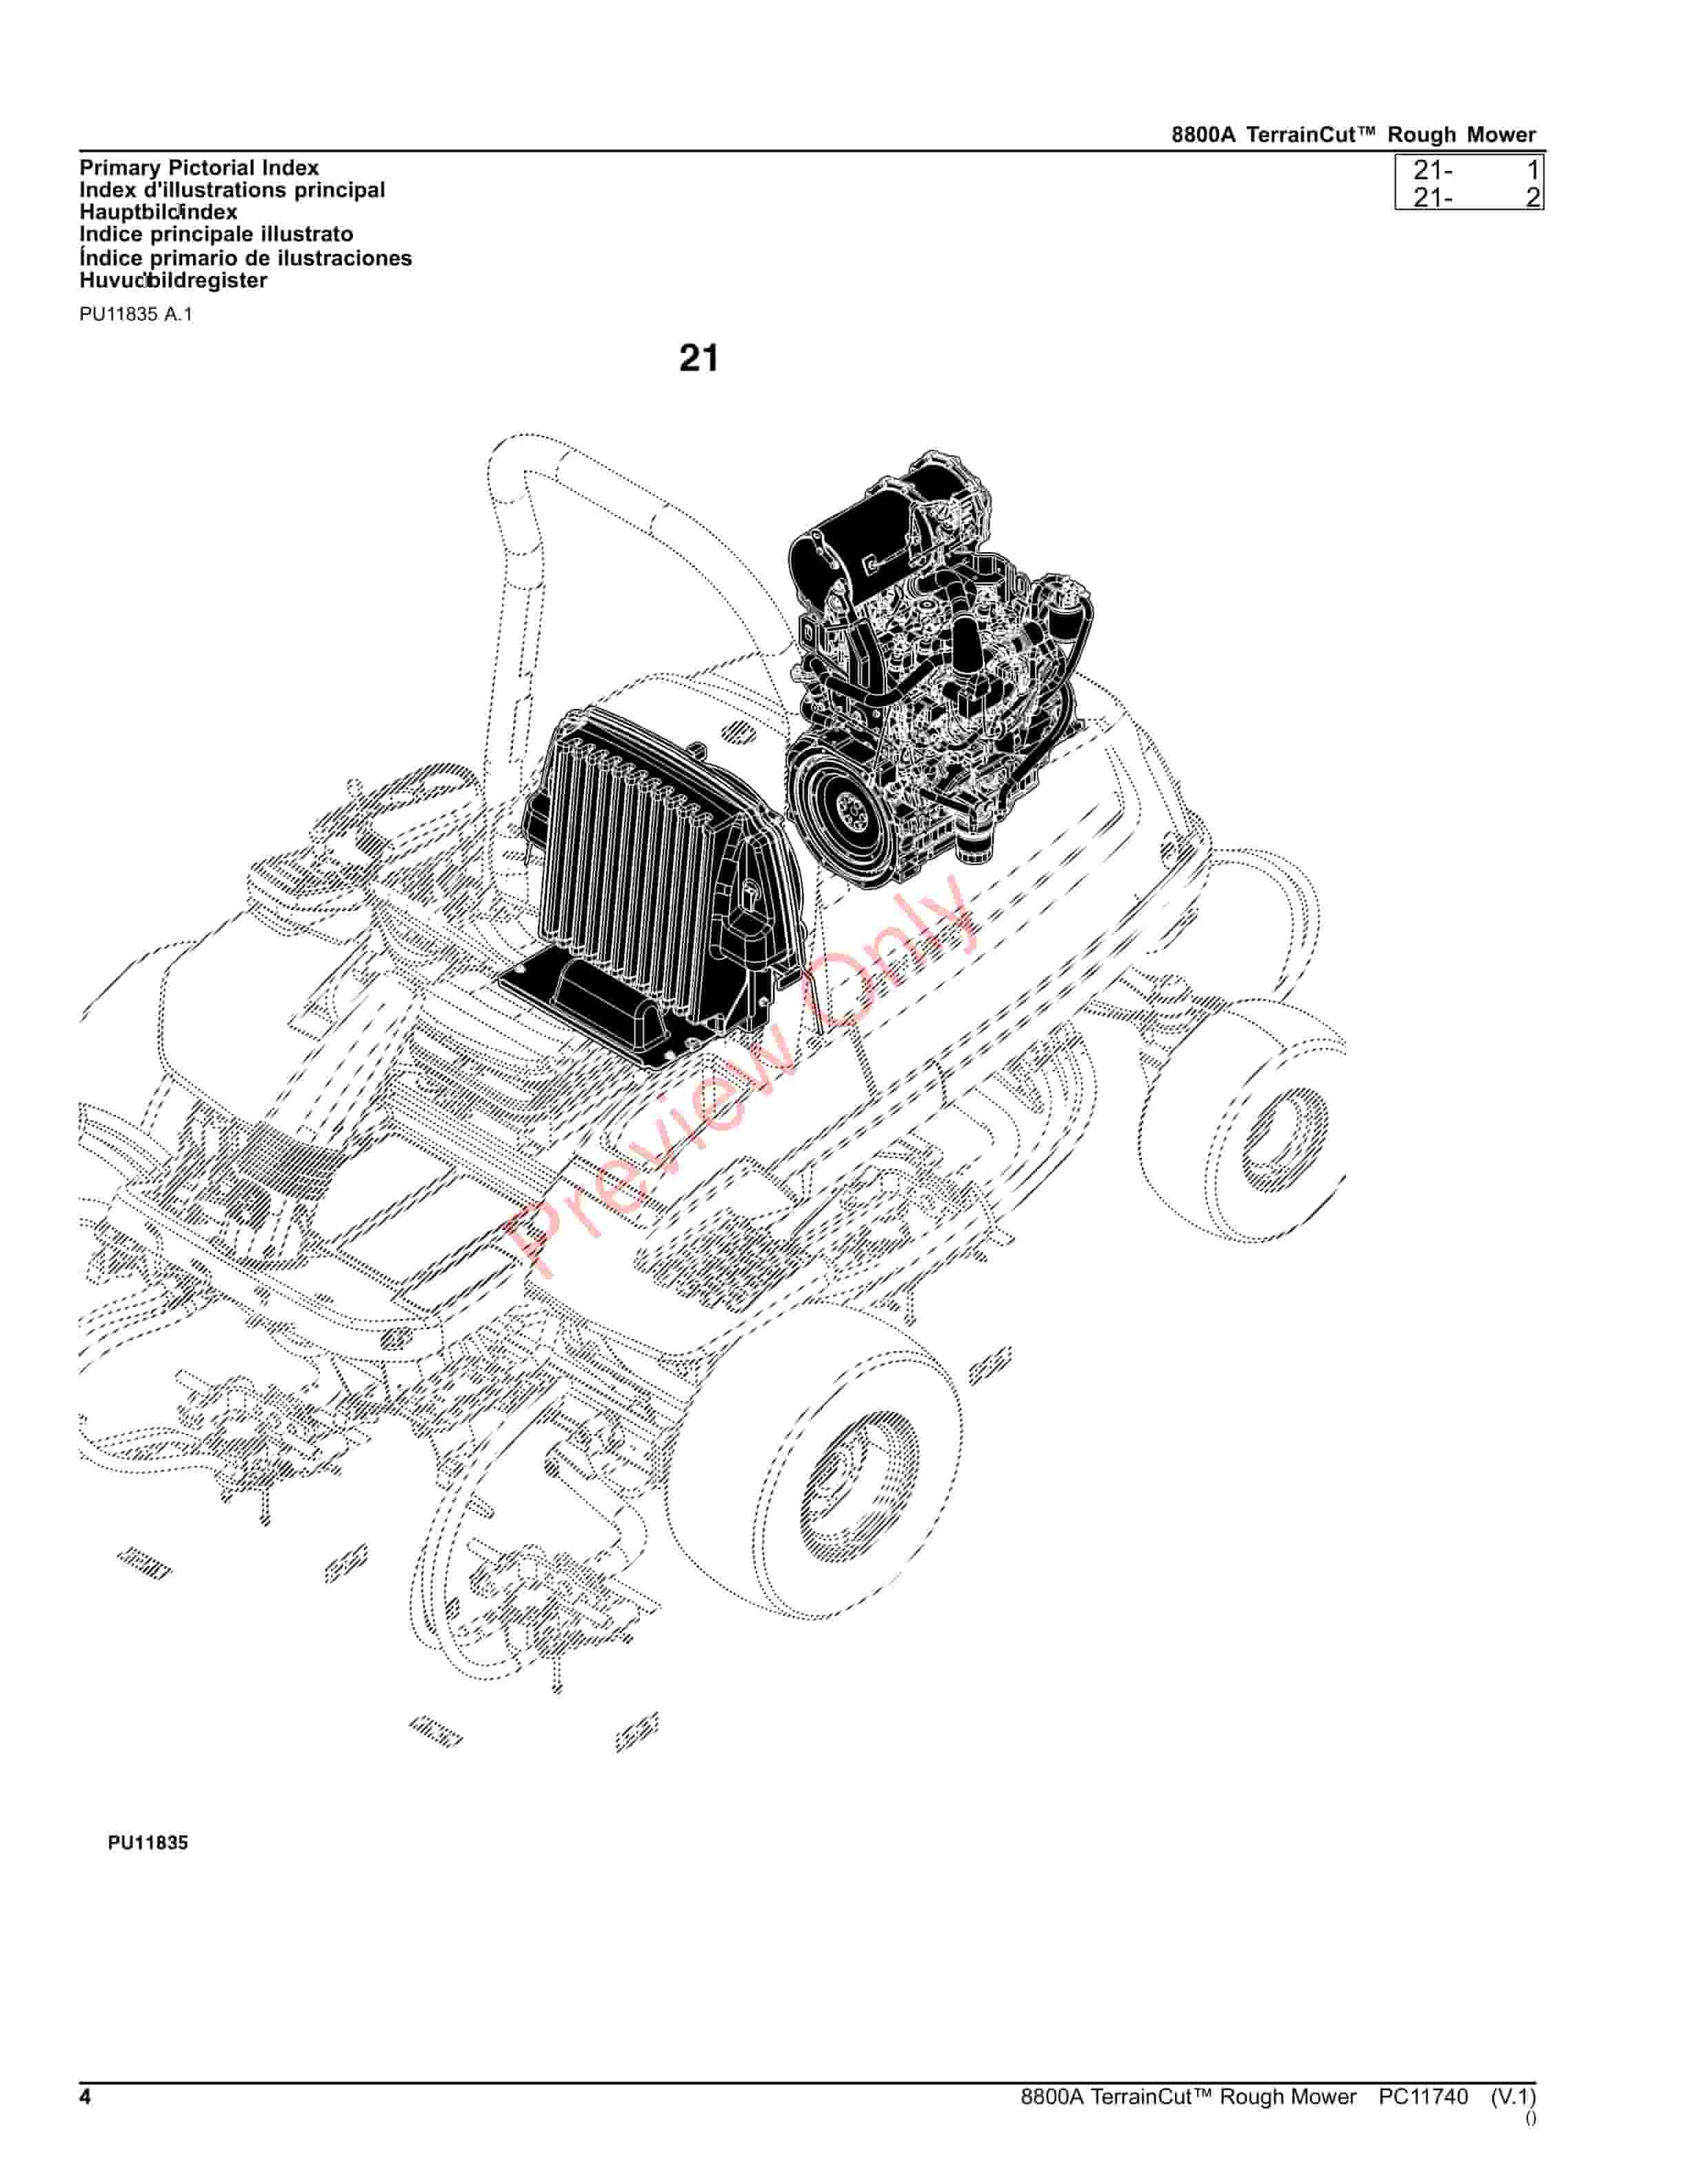 John Deere 8800A TerrainCut Rough Mower Parts Catalog PC11740 12NOV23 4